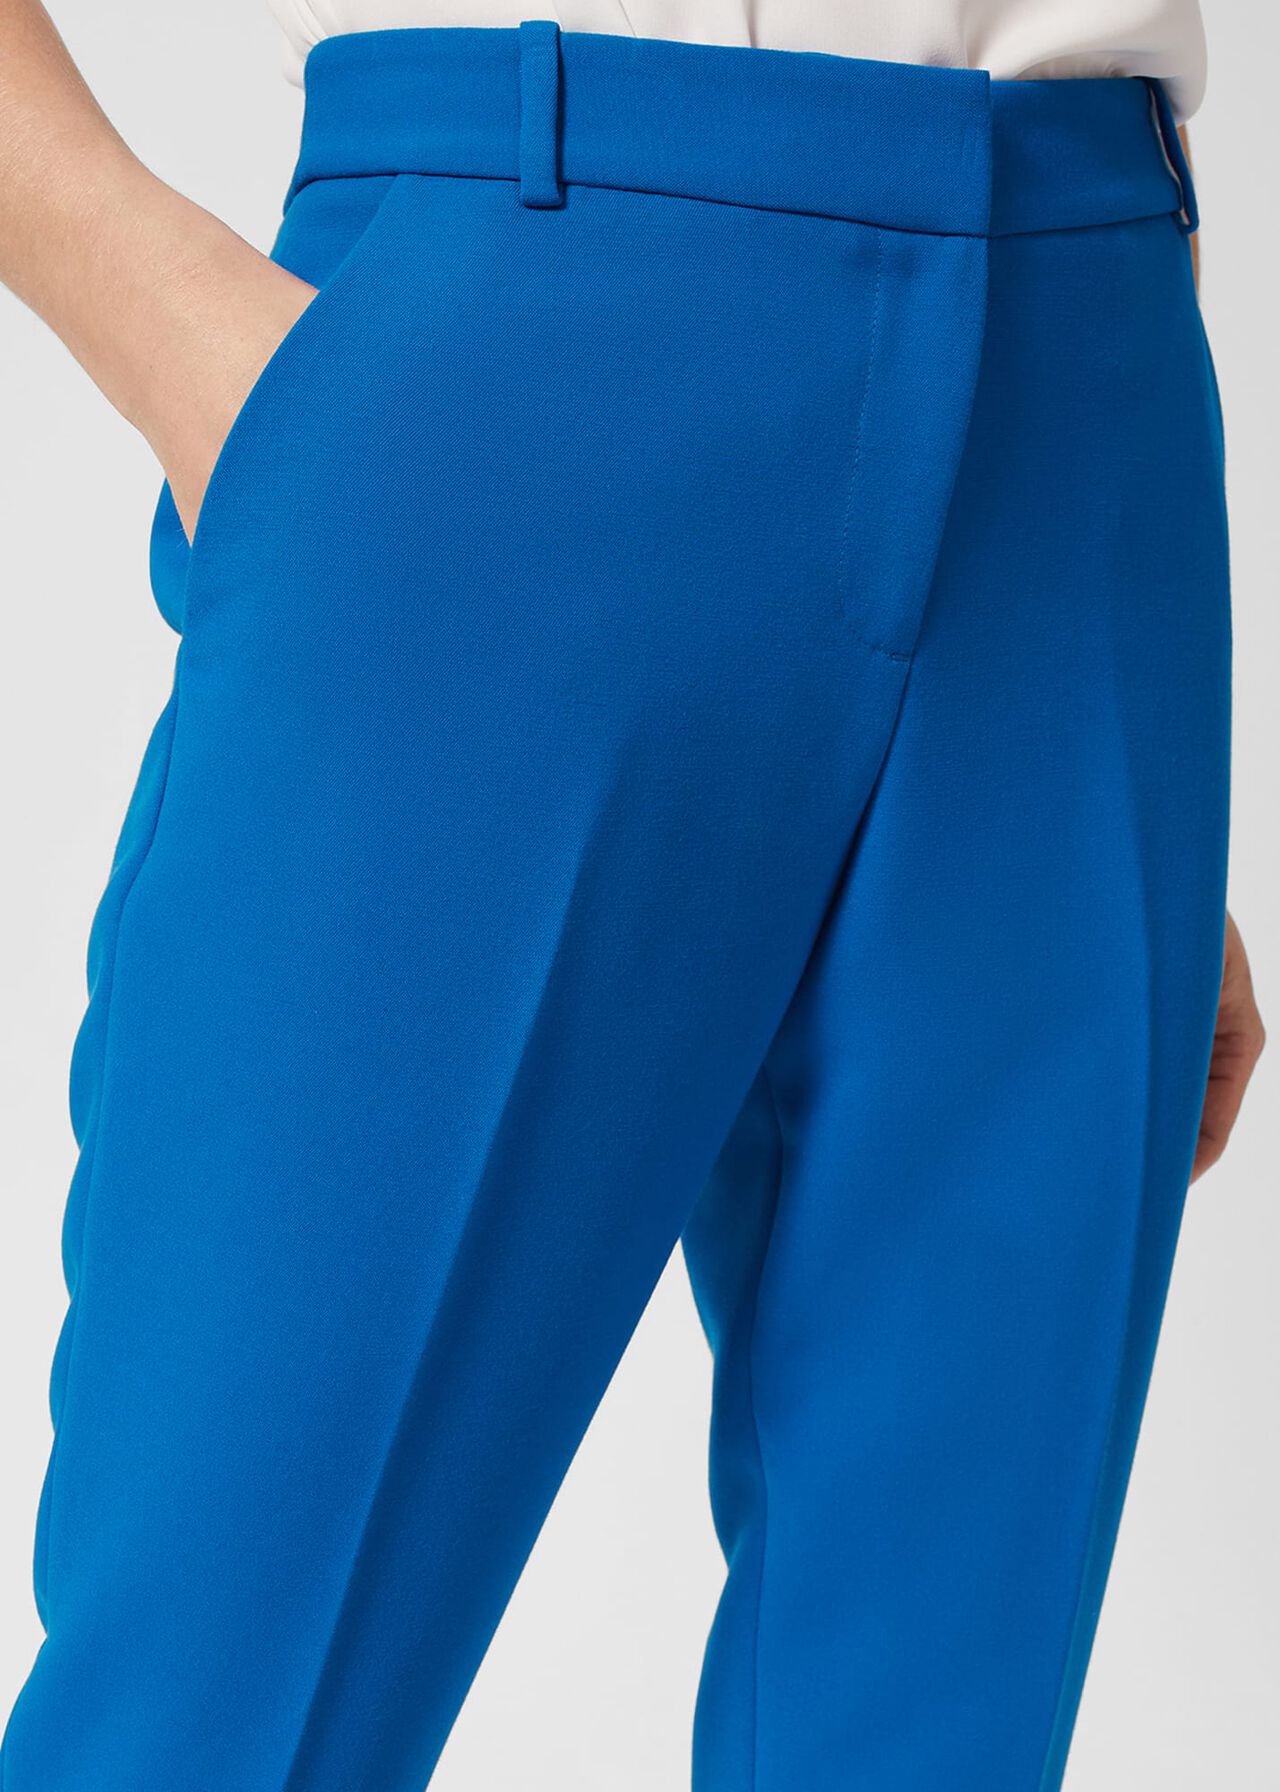 Petite Suki Pants, Imperial Blue, hi-res